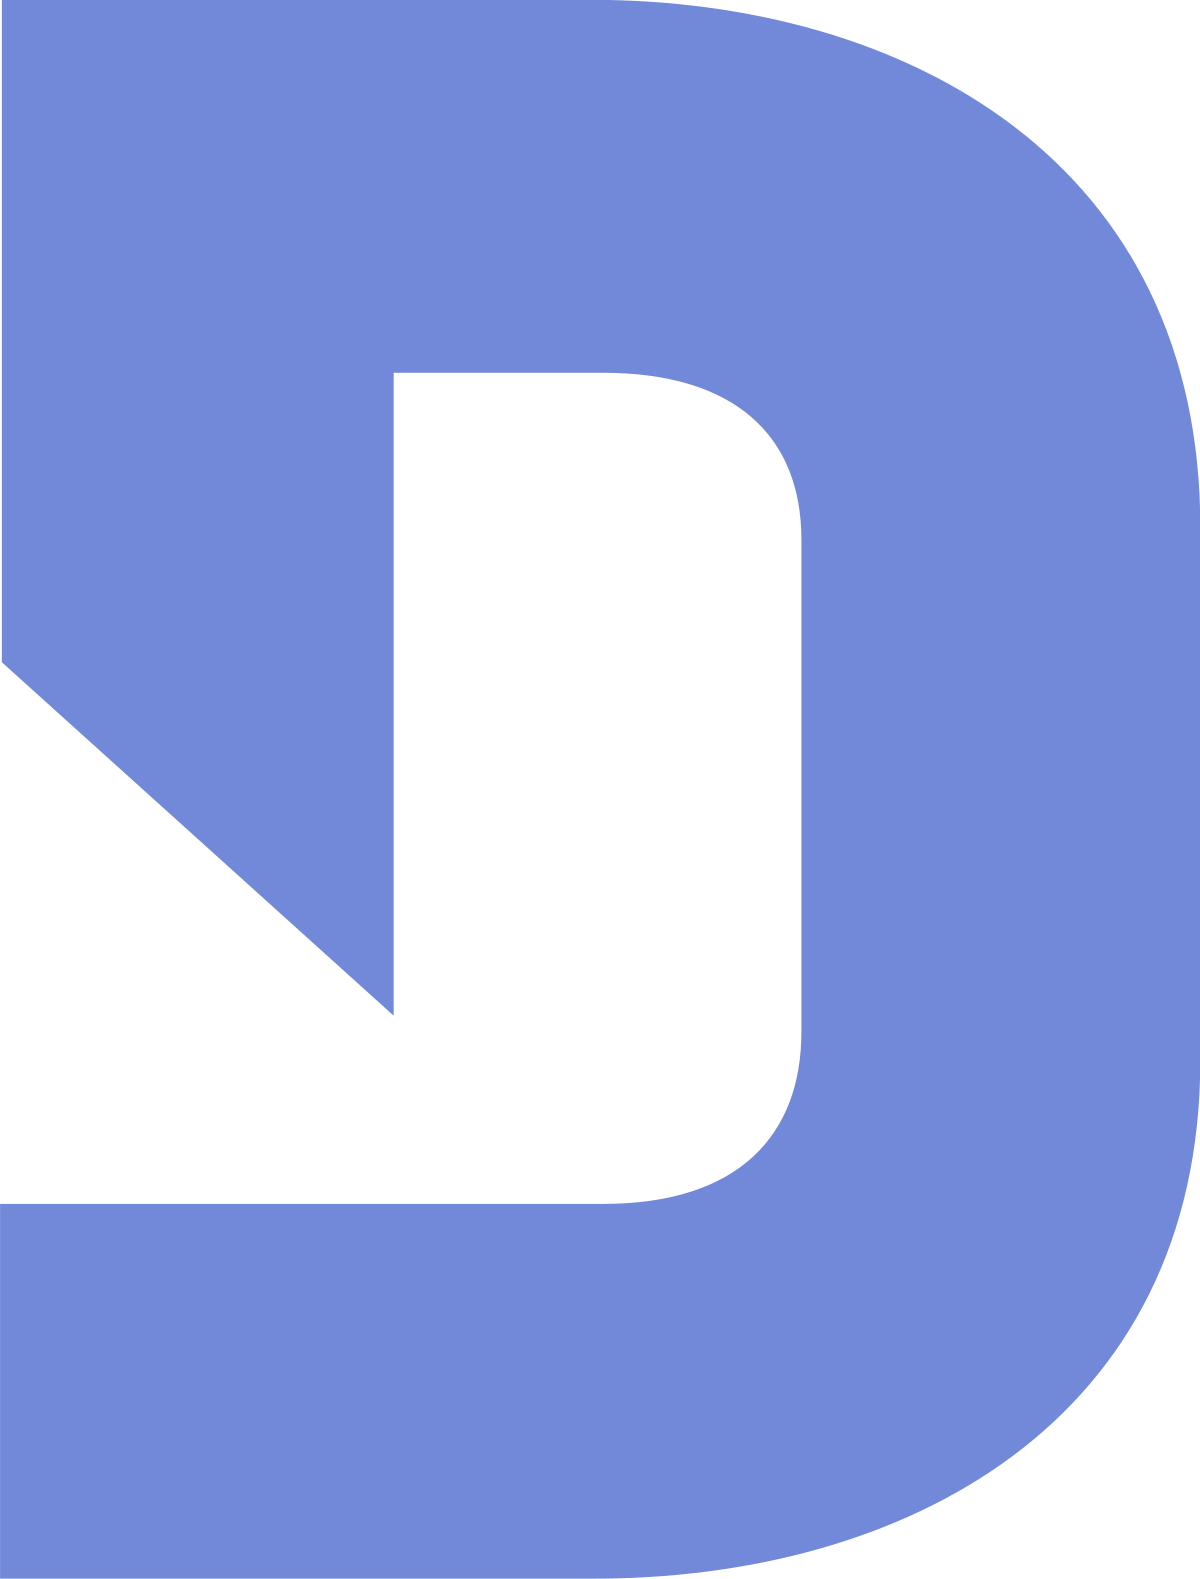 Blue Discord Logo PNG Image Background